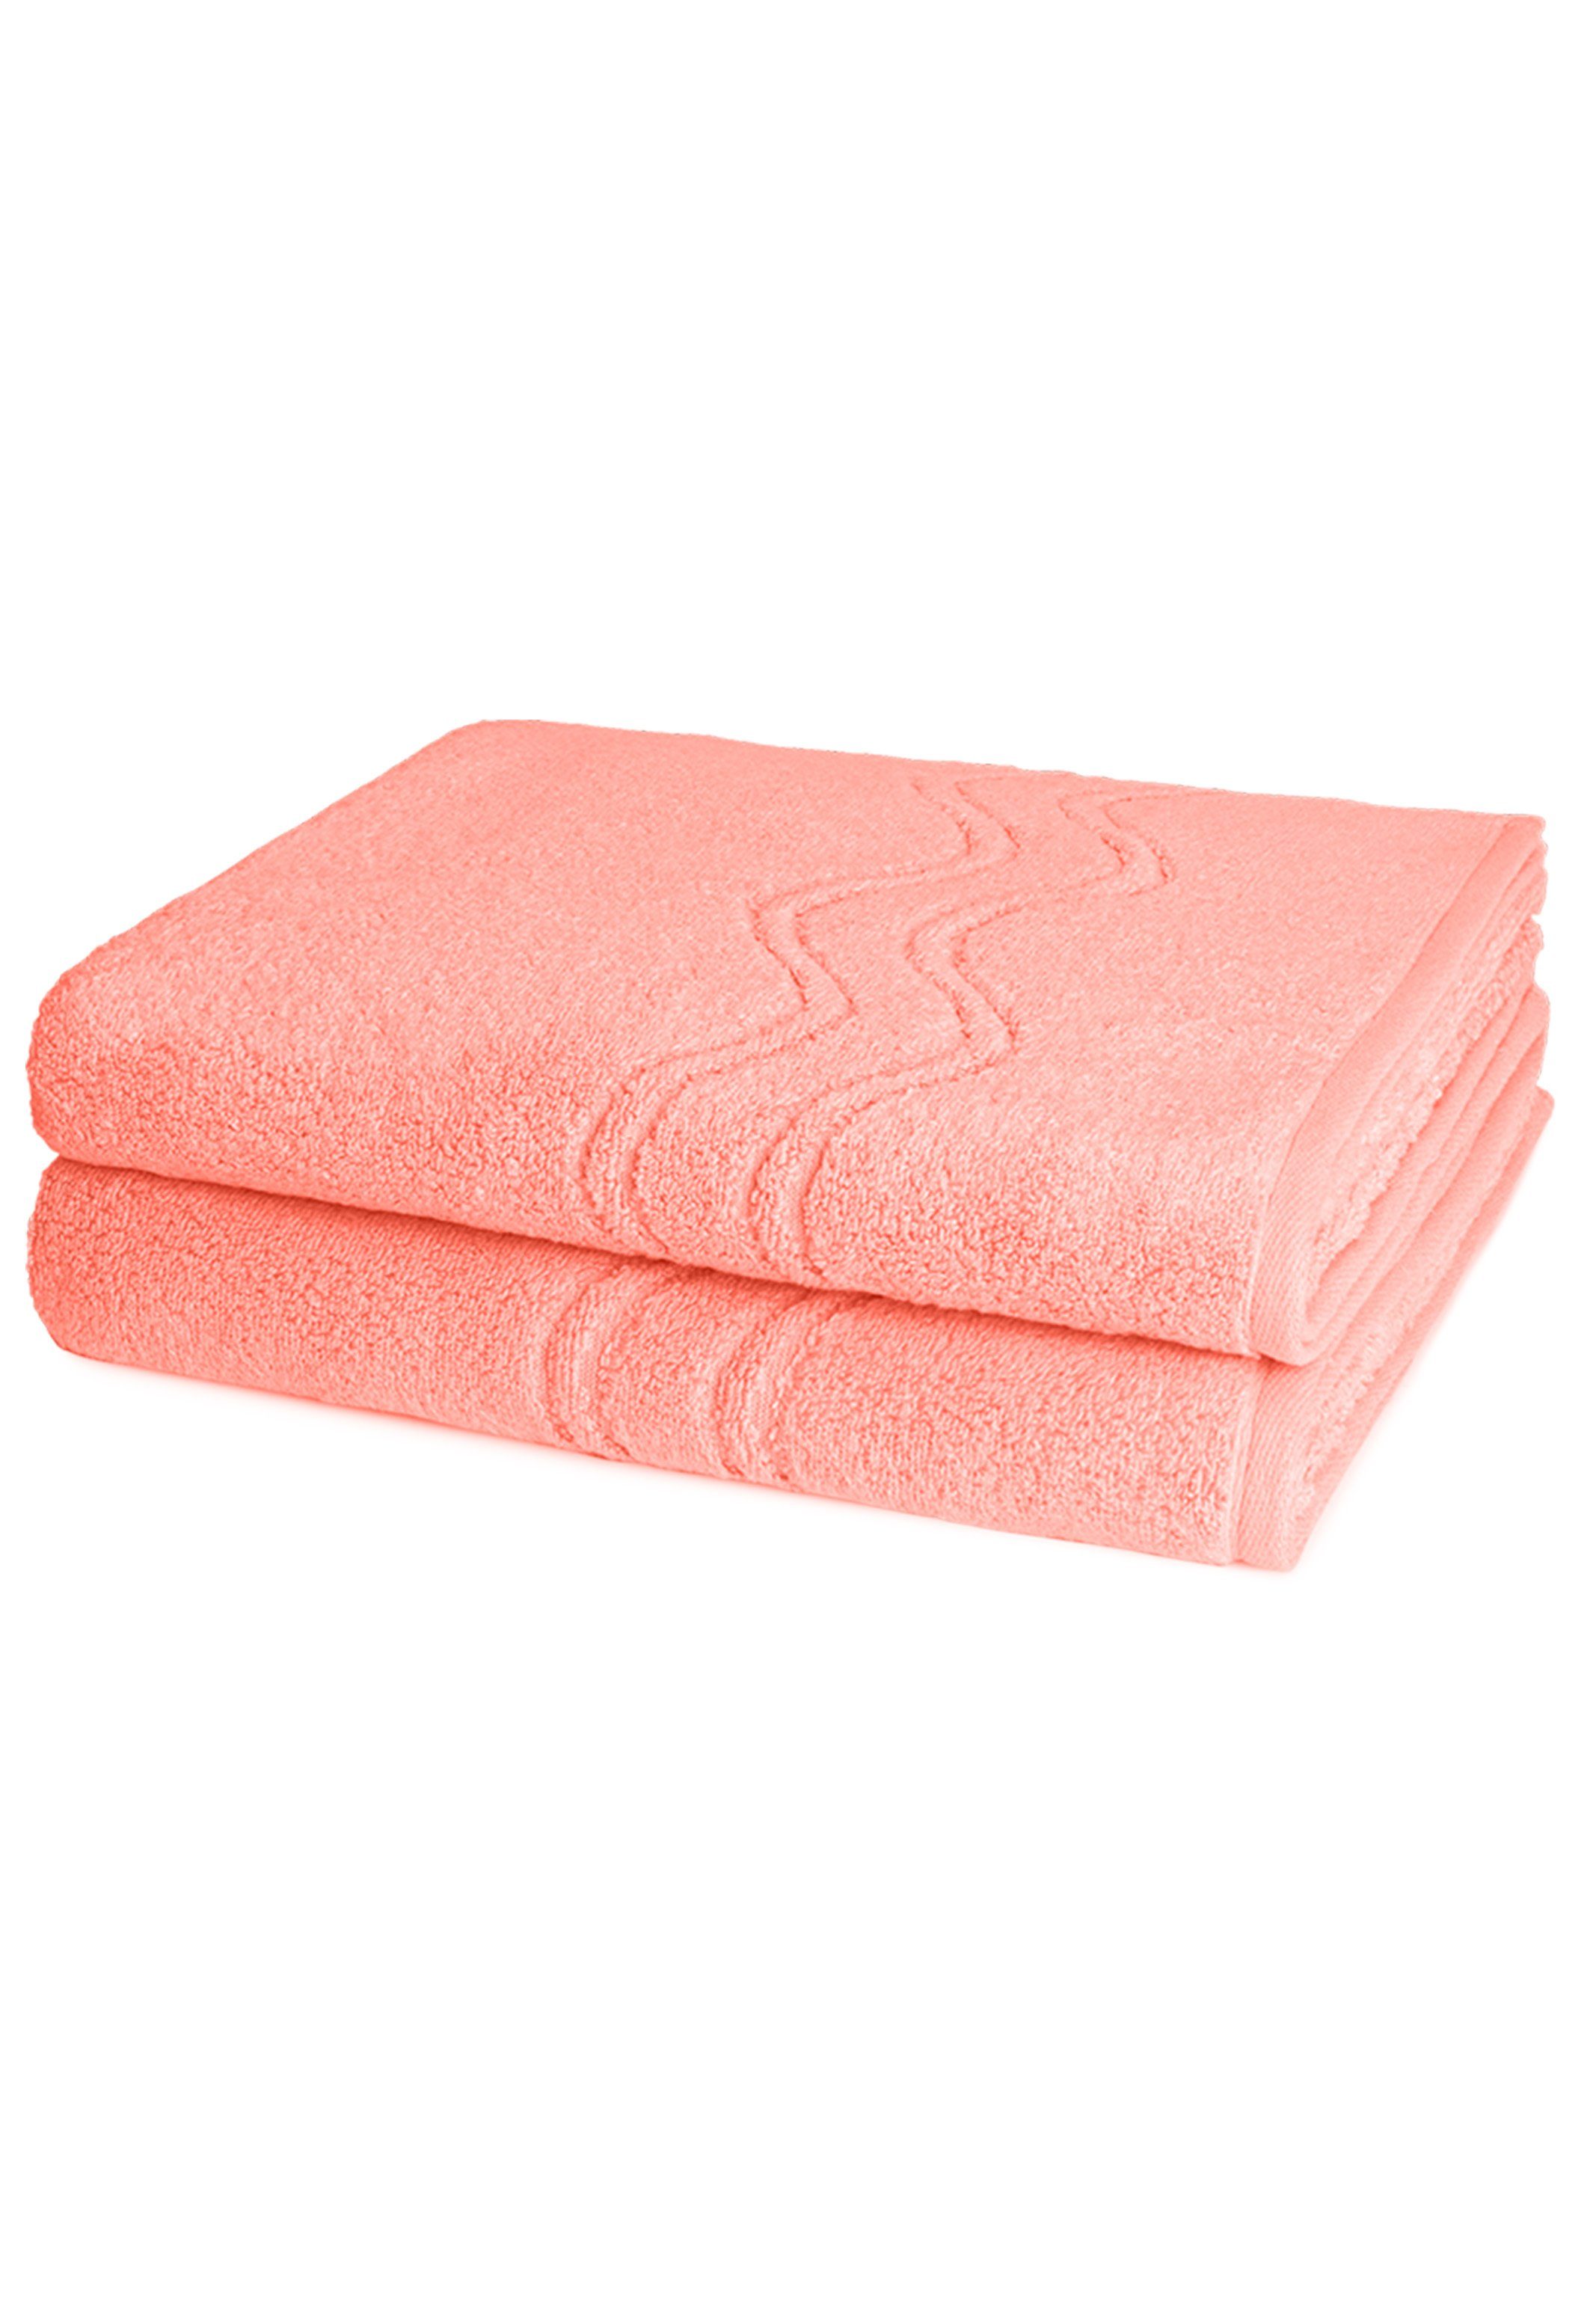 ROSS Handtuch Set Cashmere feeling, Walkfrottee, (Spar-Set, 2-tlg), 2 X Duschtuch - Im Set - Baumwolle - Peach Pink | Handtuch-Sets